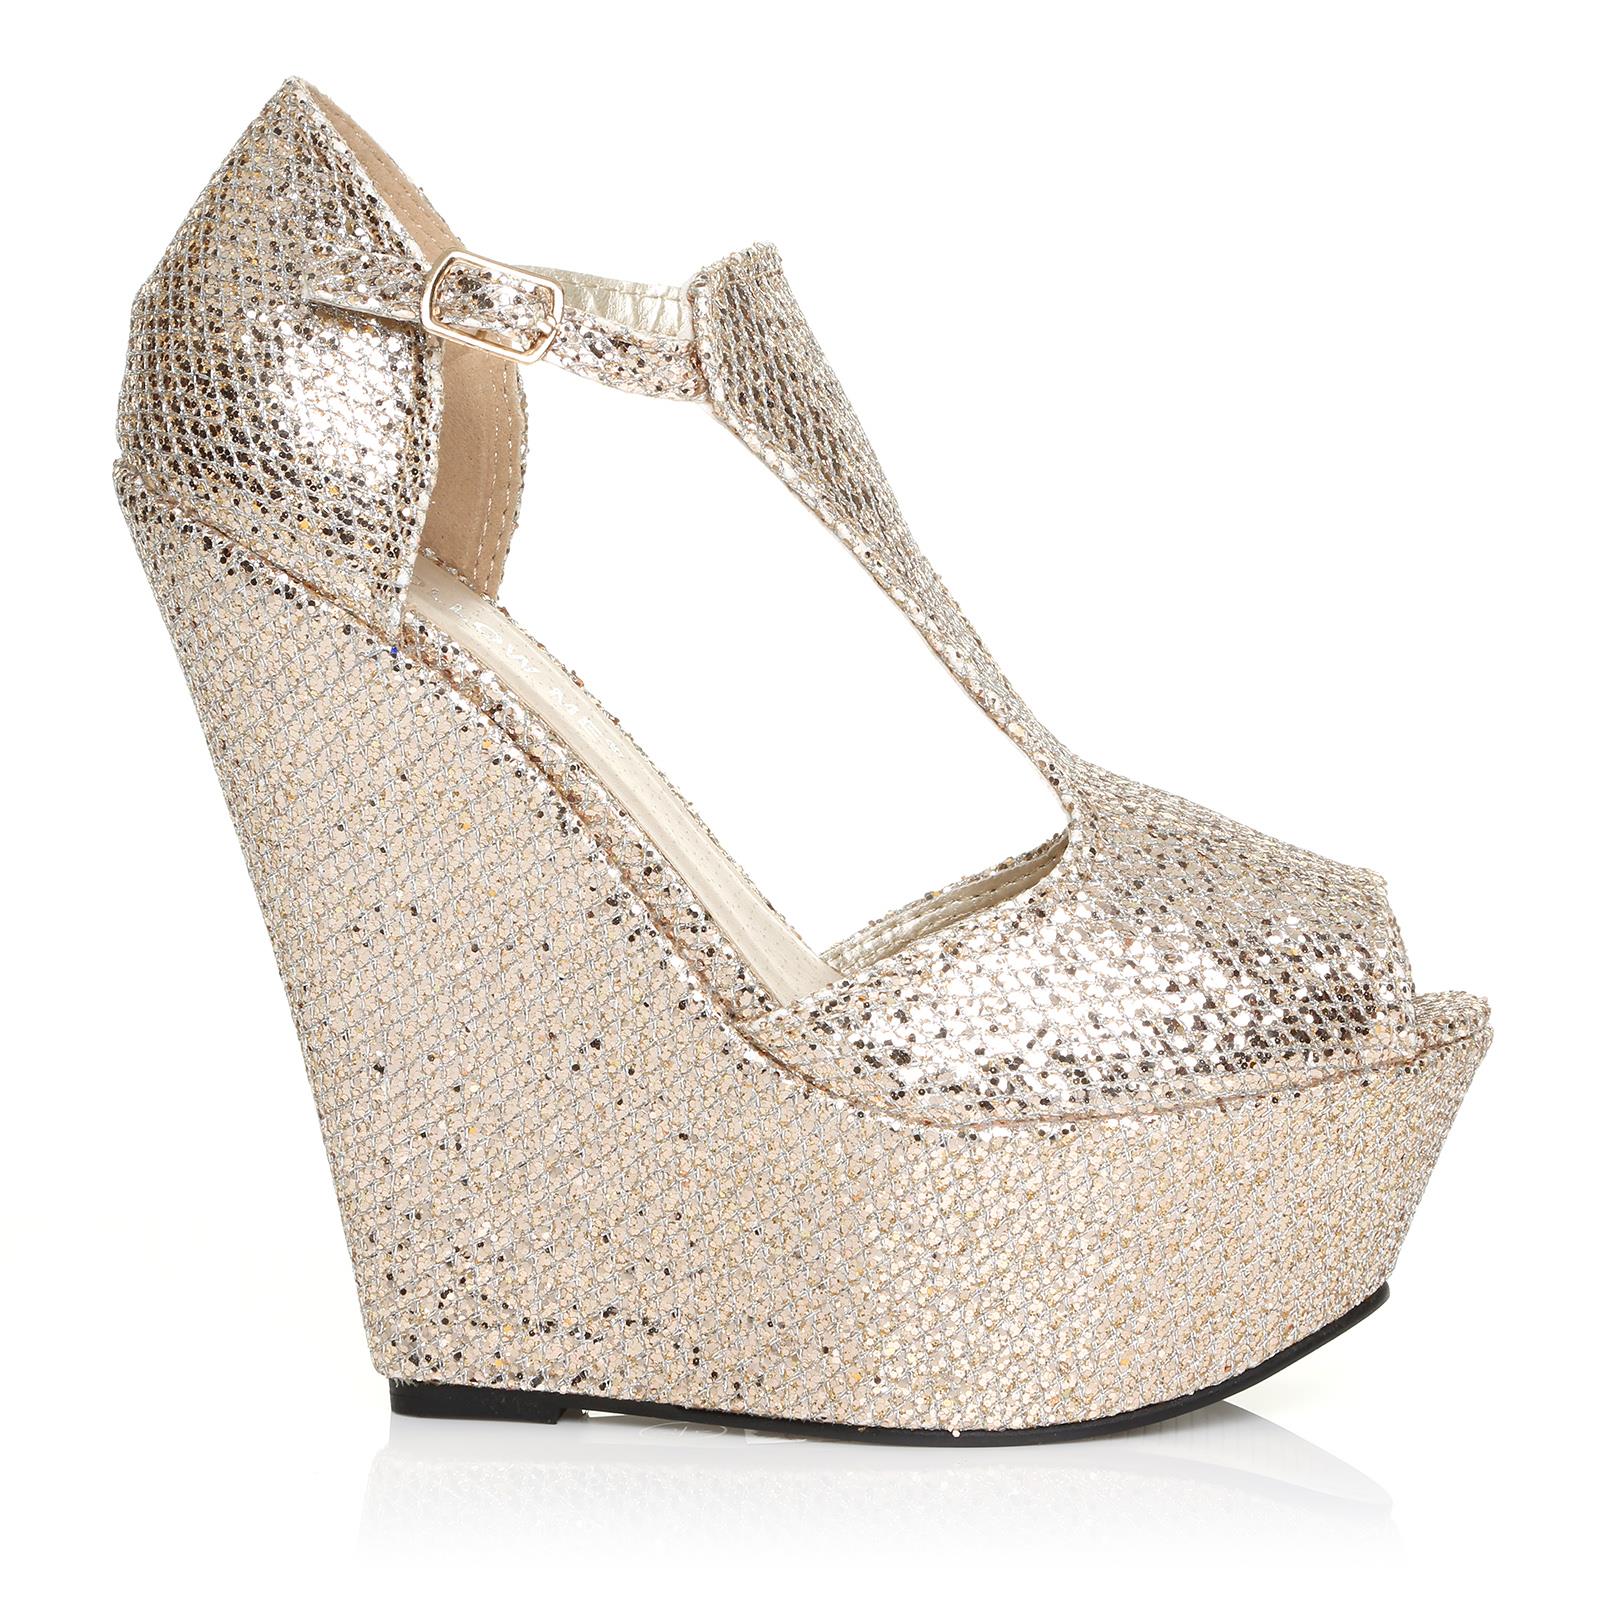 ENYA Champagne Glitter Wedge Very High Heel Platform Peep Toes Size US 9